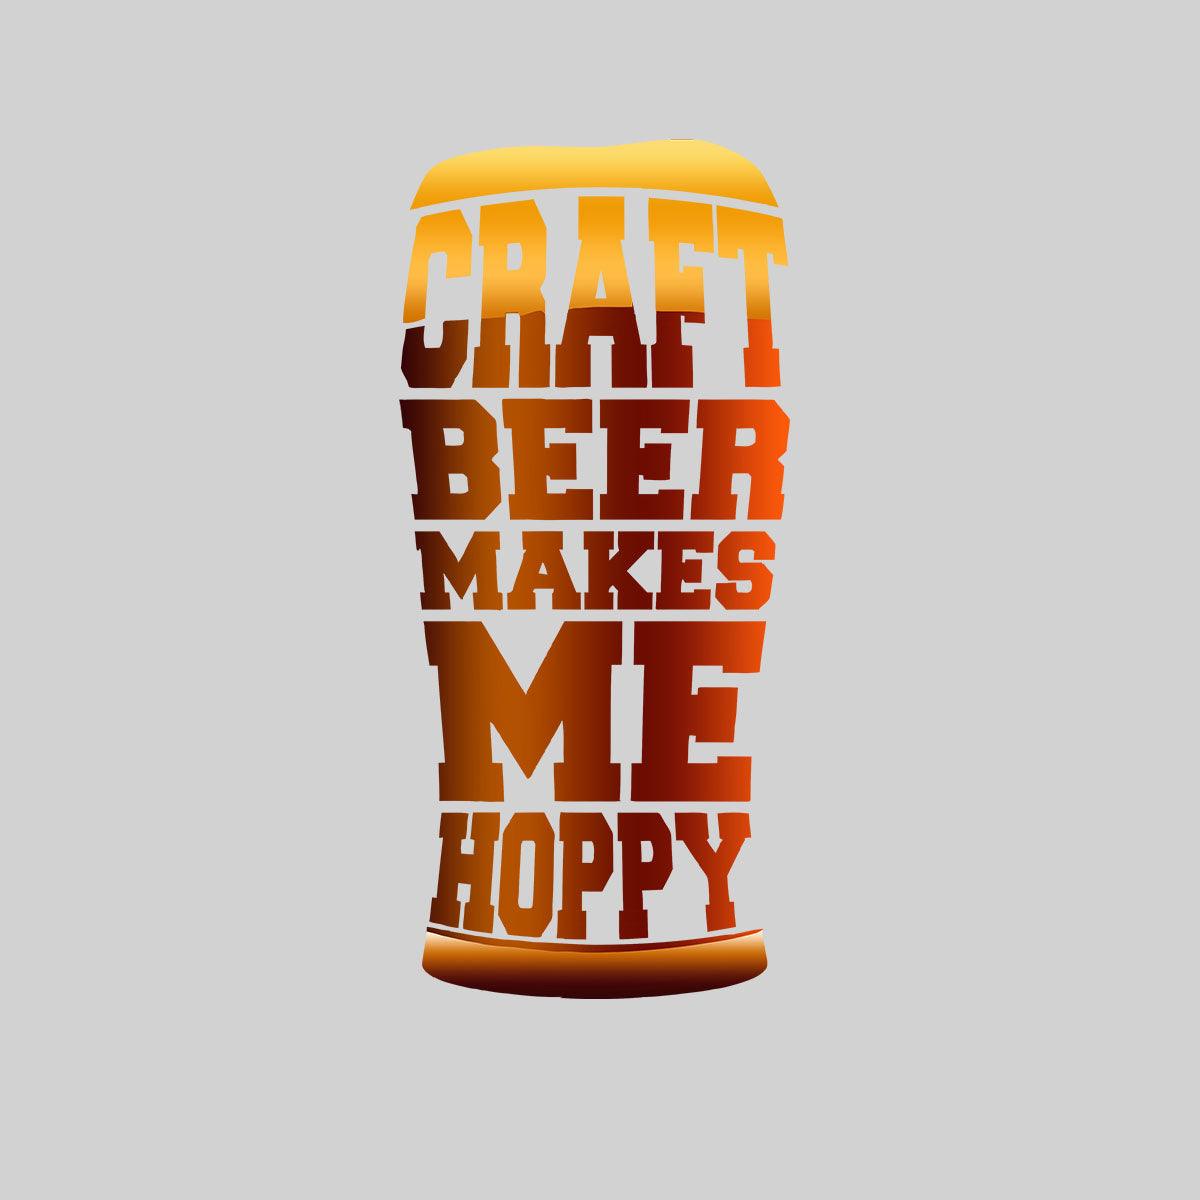 Craft Beer Pub Crew Neck Funny Adult Novelty Gift Typography Unisex T-shirt - Kuzi Tees